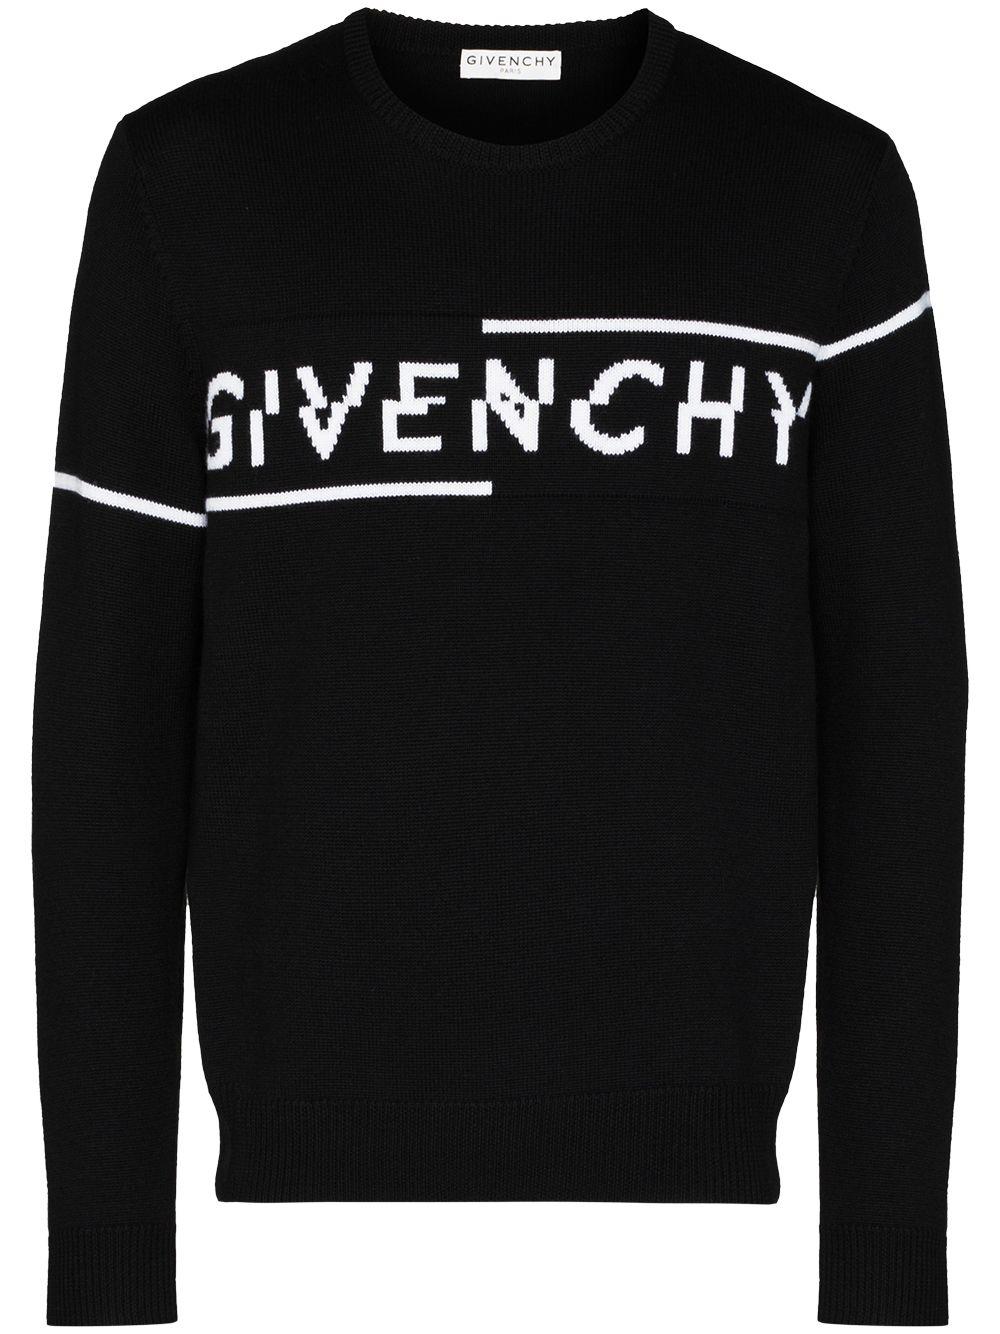 Givenchy Wool Logo Knit Jumper in Black for Men - Lyst